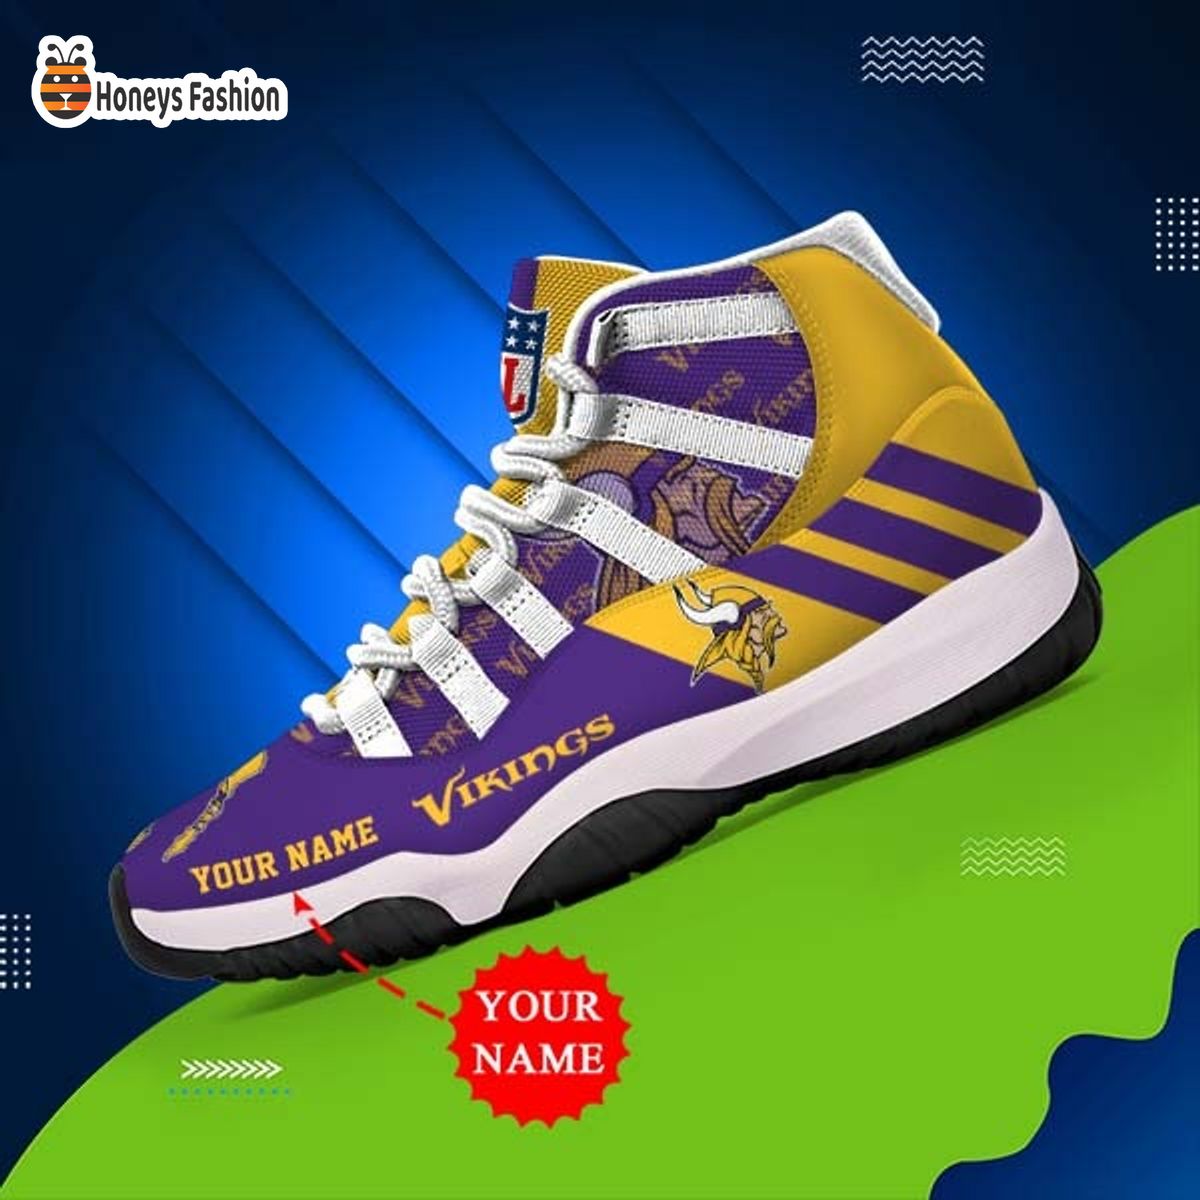 Minnesota Vikings NFL Adidas Personalized Air Jordan 11 Shoes